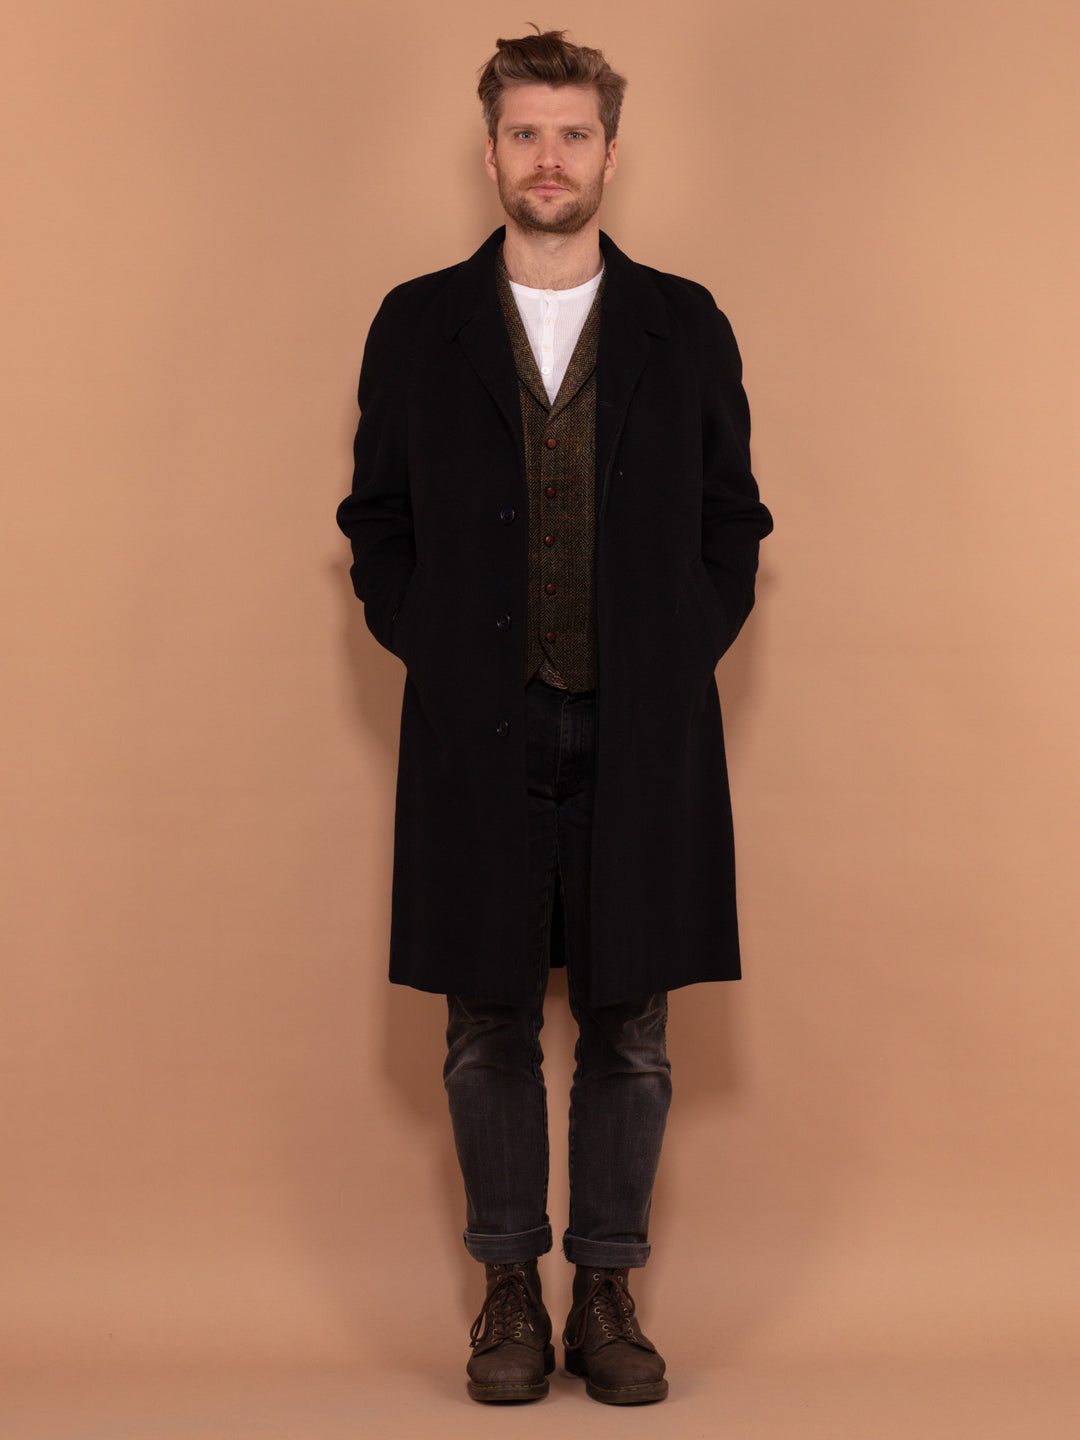 Minimalist Wool Blend Coat 70's, Size S Small, Vintage Men Overcoat, Classy Black Topcoat, Elegant Menswear, Outerwear, Formal Coat